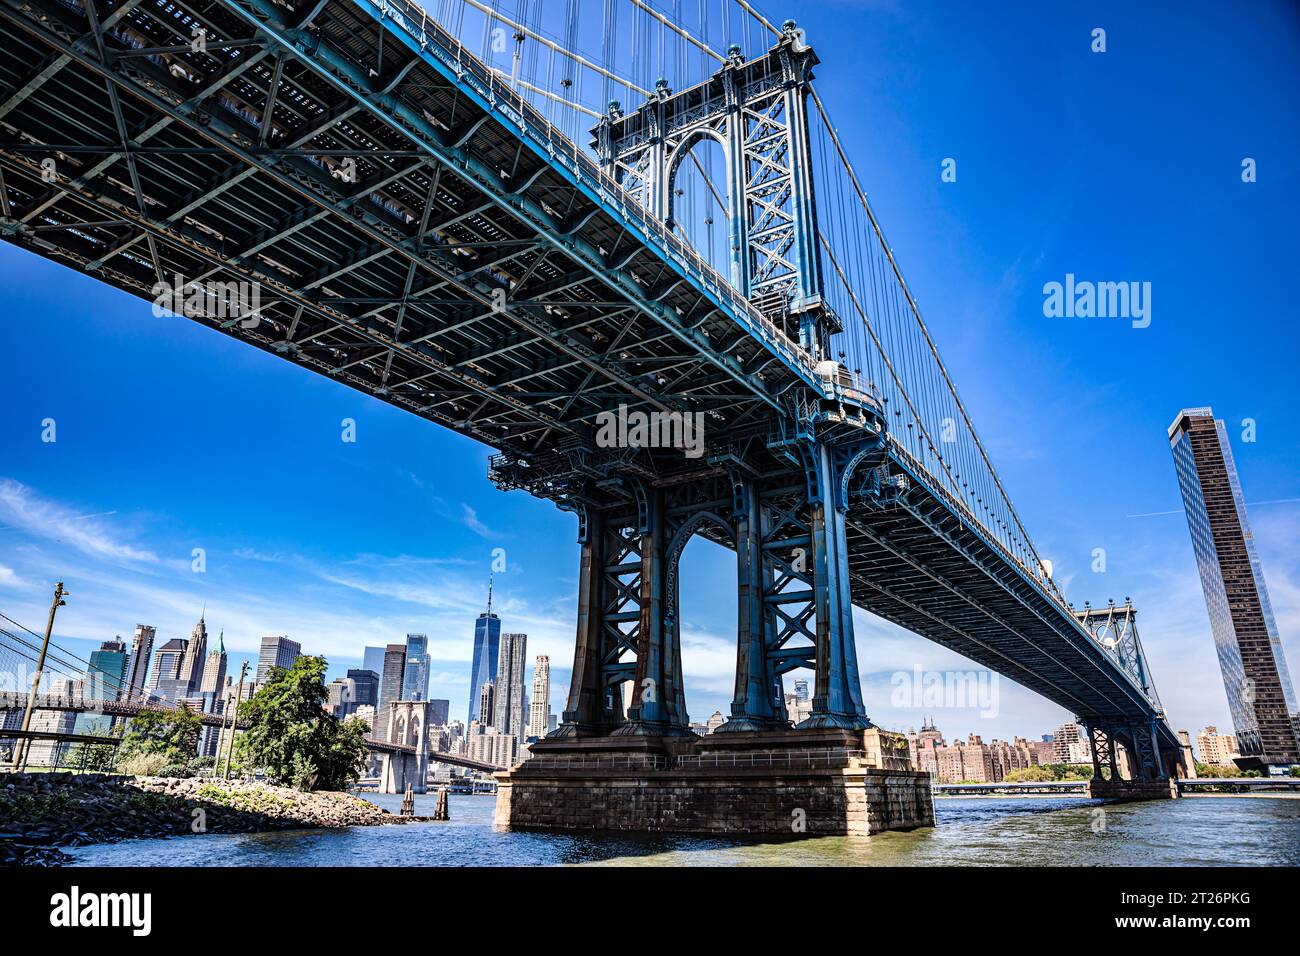 View from underneath the Manhattan Bridge in New York. Stock Photo